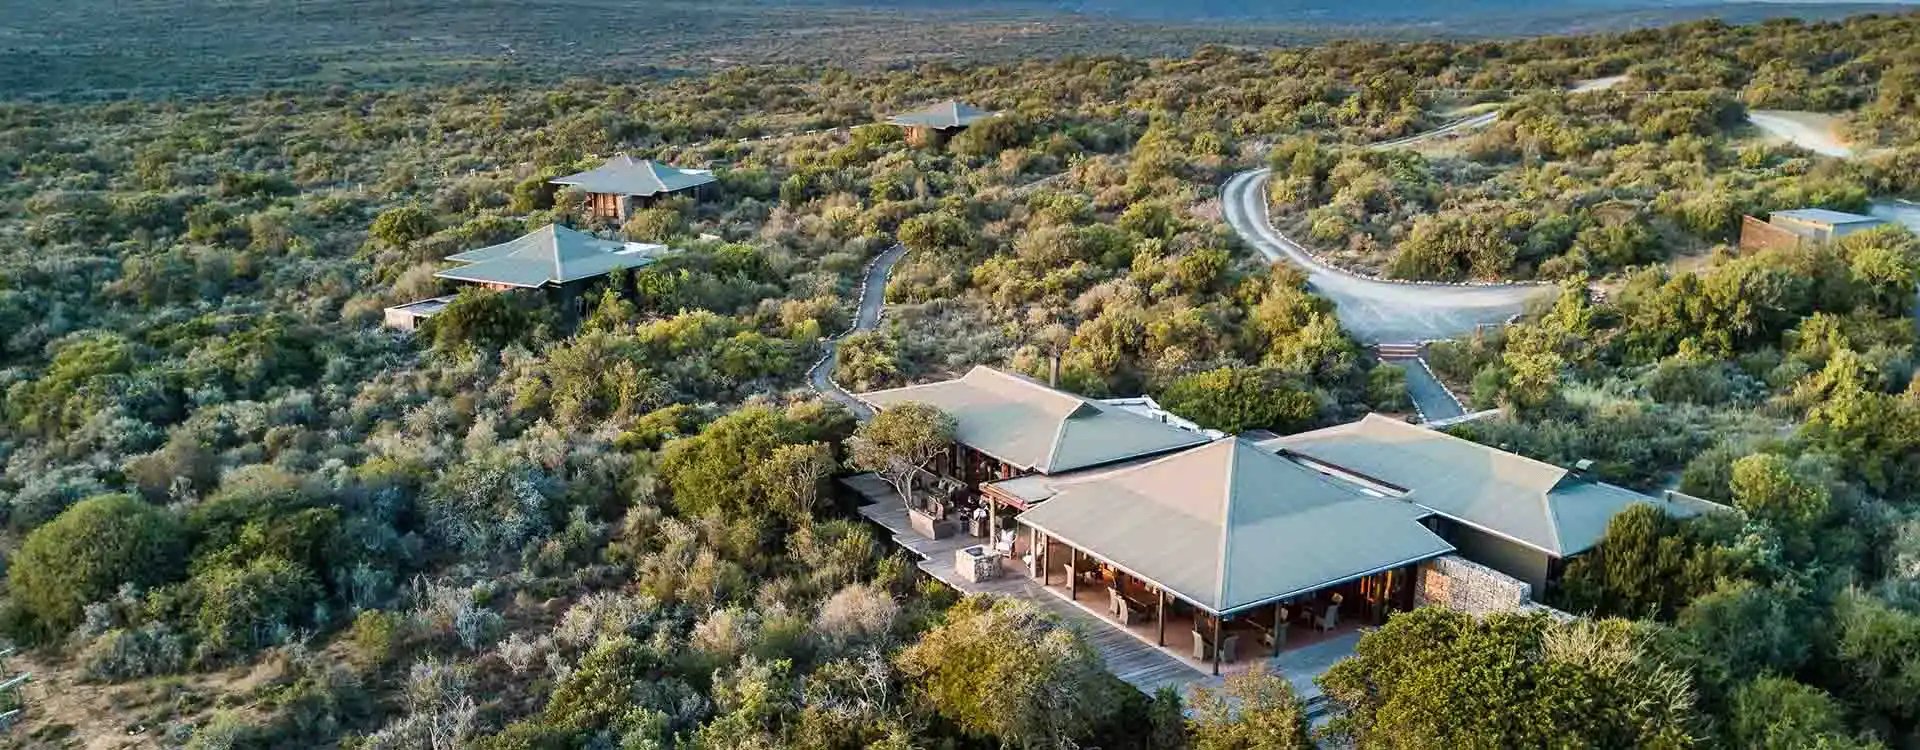 The aerial of Kwandwe Ecca Lodge, South Africa